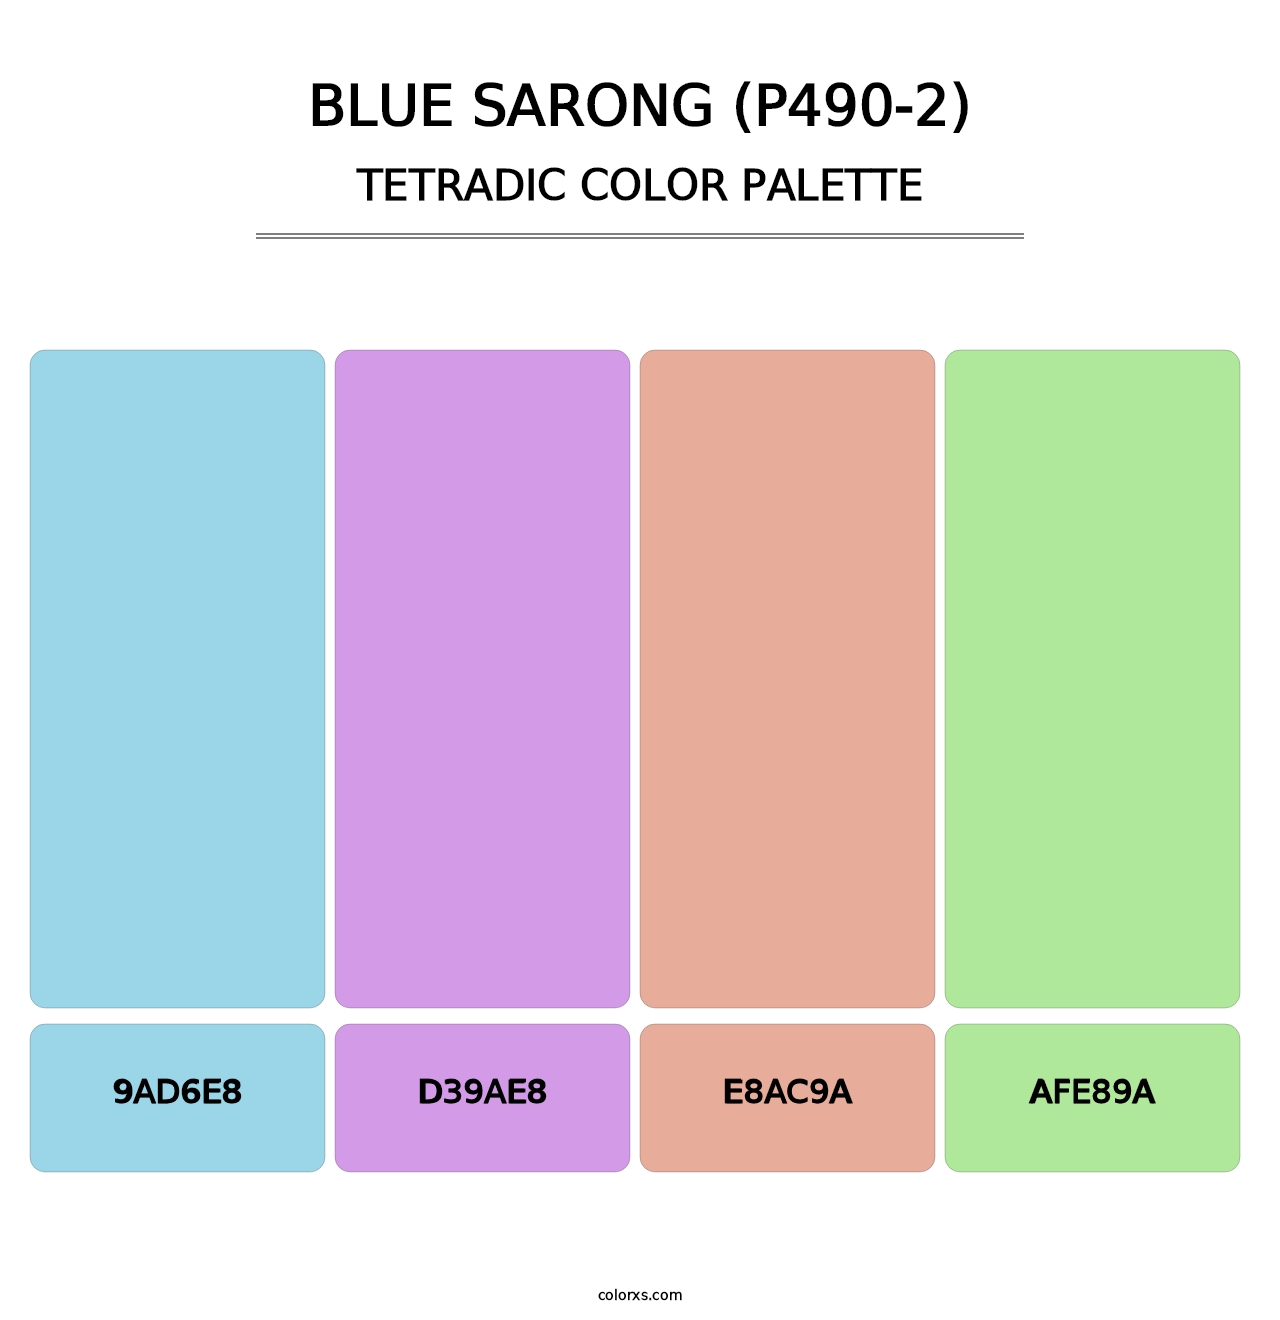 Blue Sarong (P490-2) - Tetradic Color Palette